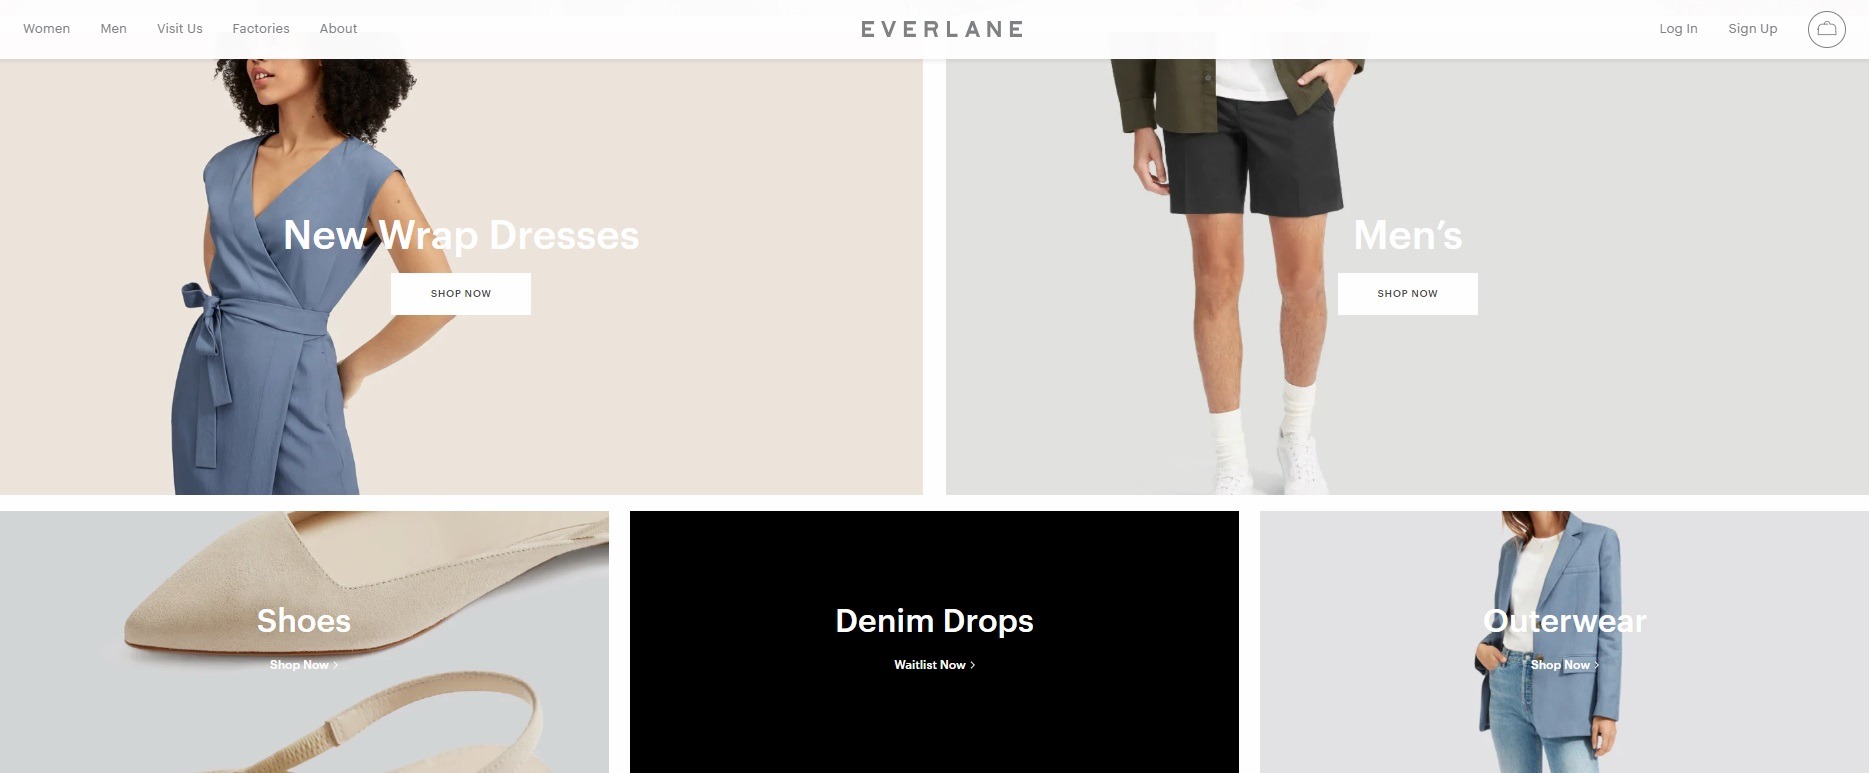 online clothing brand example everlane